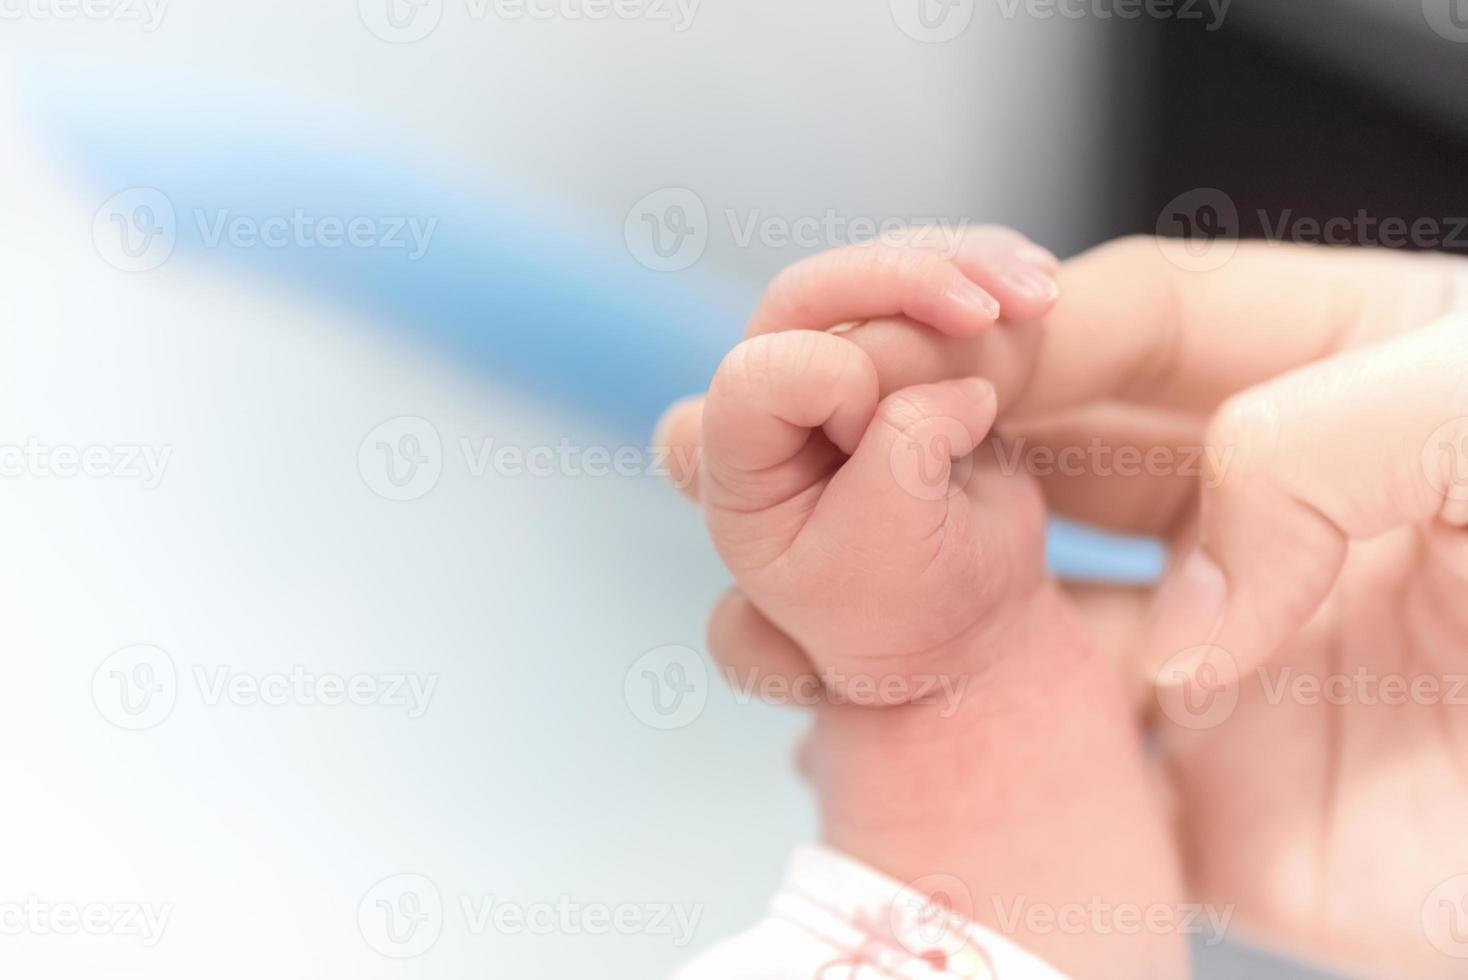 nyfödd hand som håller moderfingret på sjukhuset foto